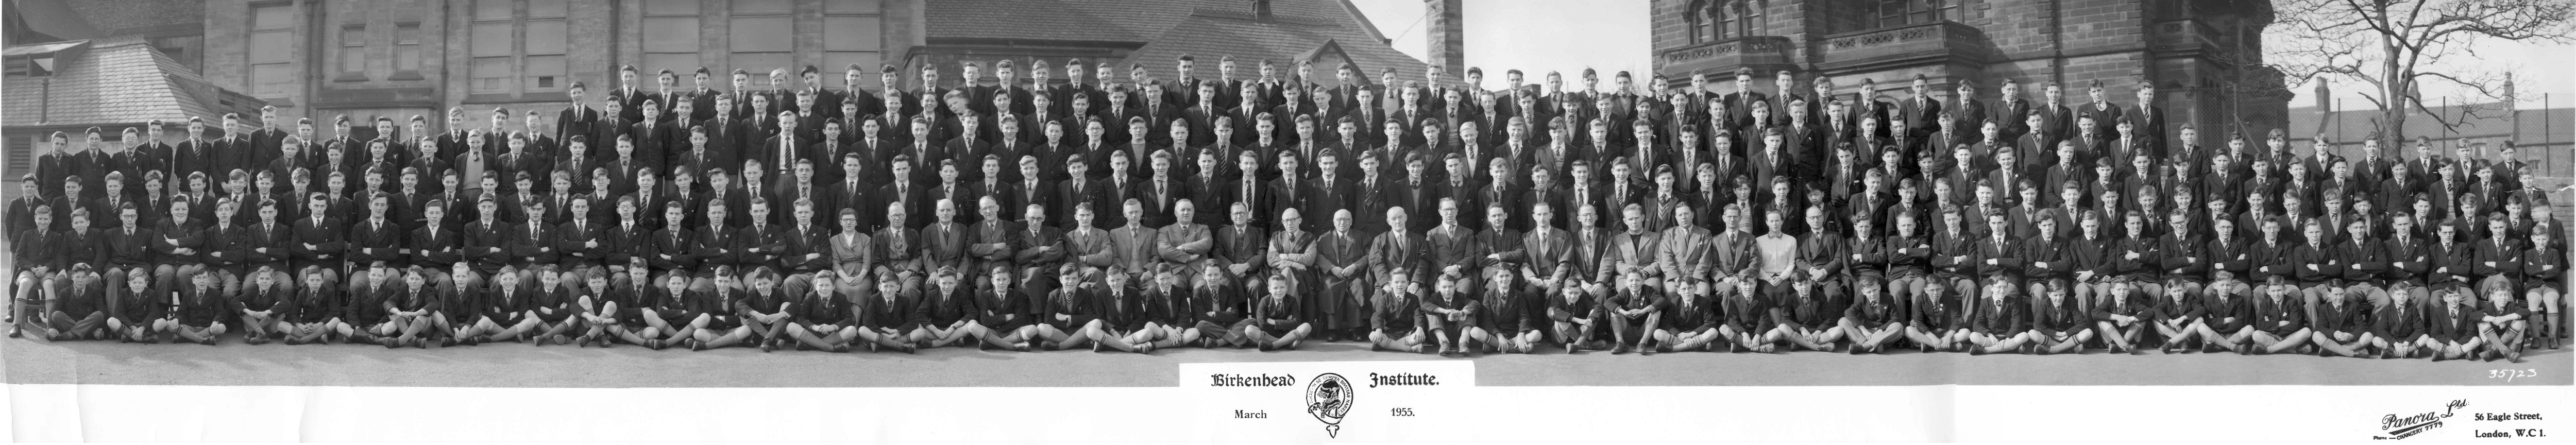 Whole School Photograph 1955